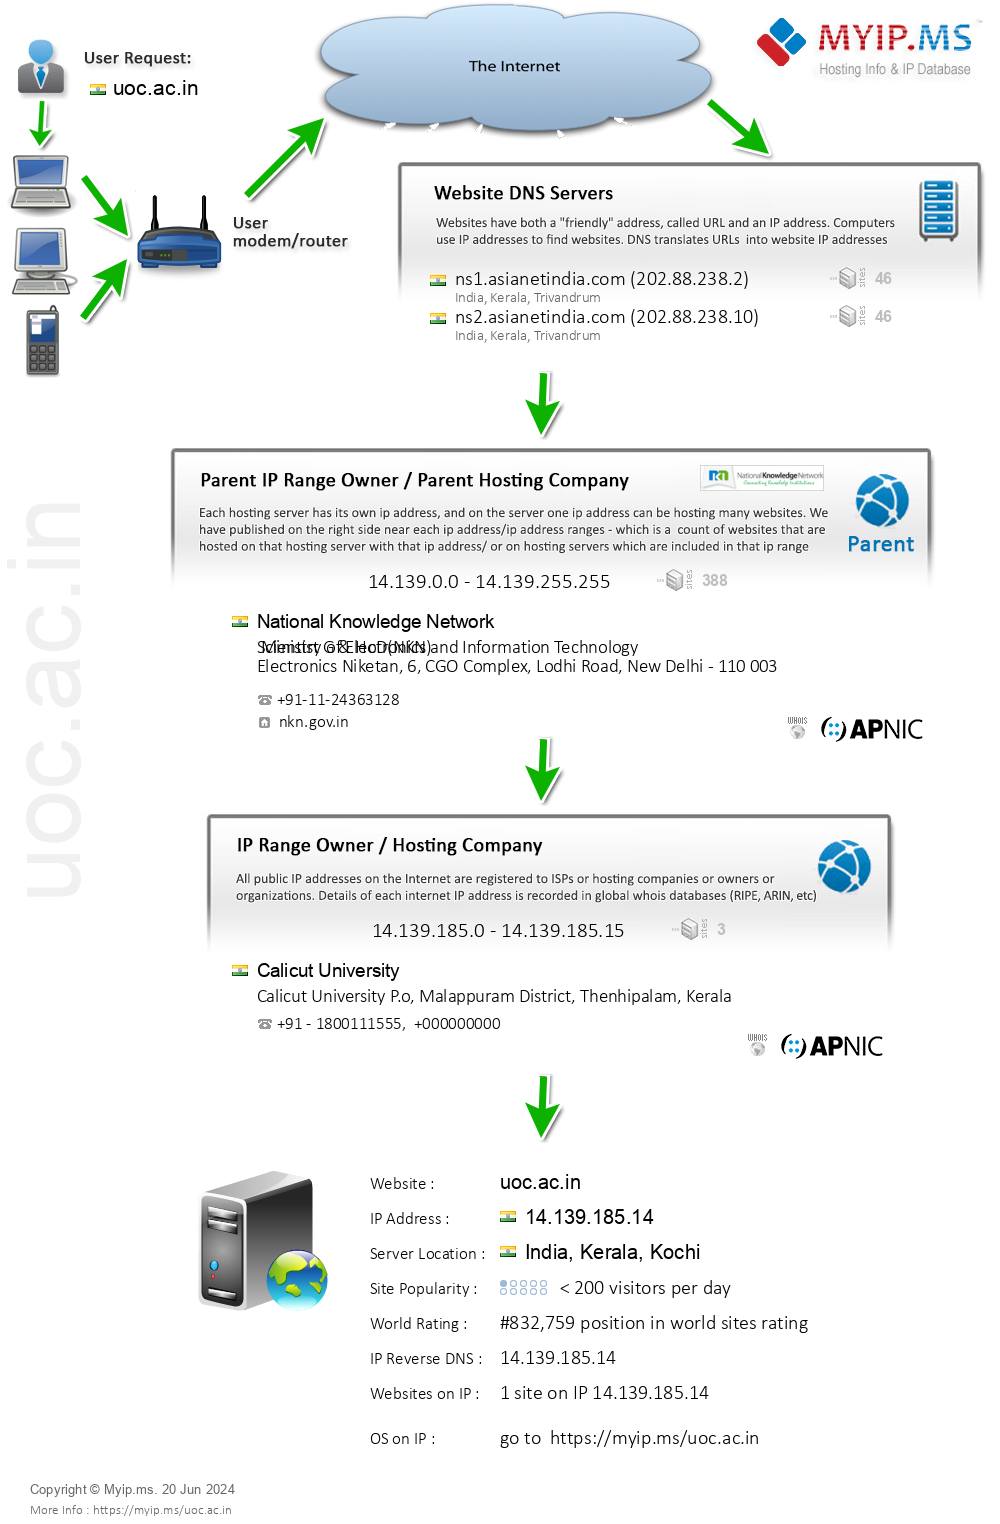 Uoc.ac.in - Website Hosting Visual IP Diagram